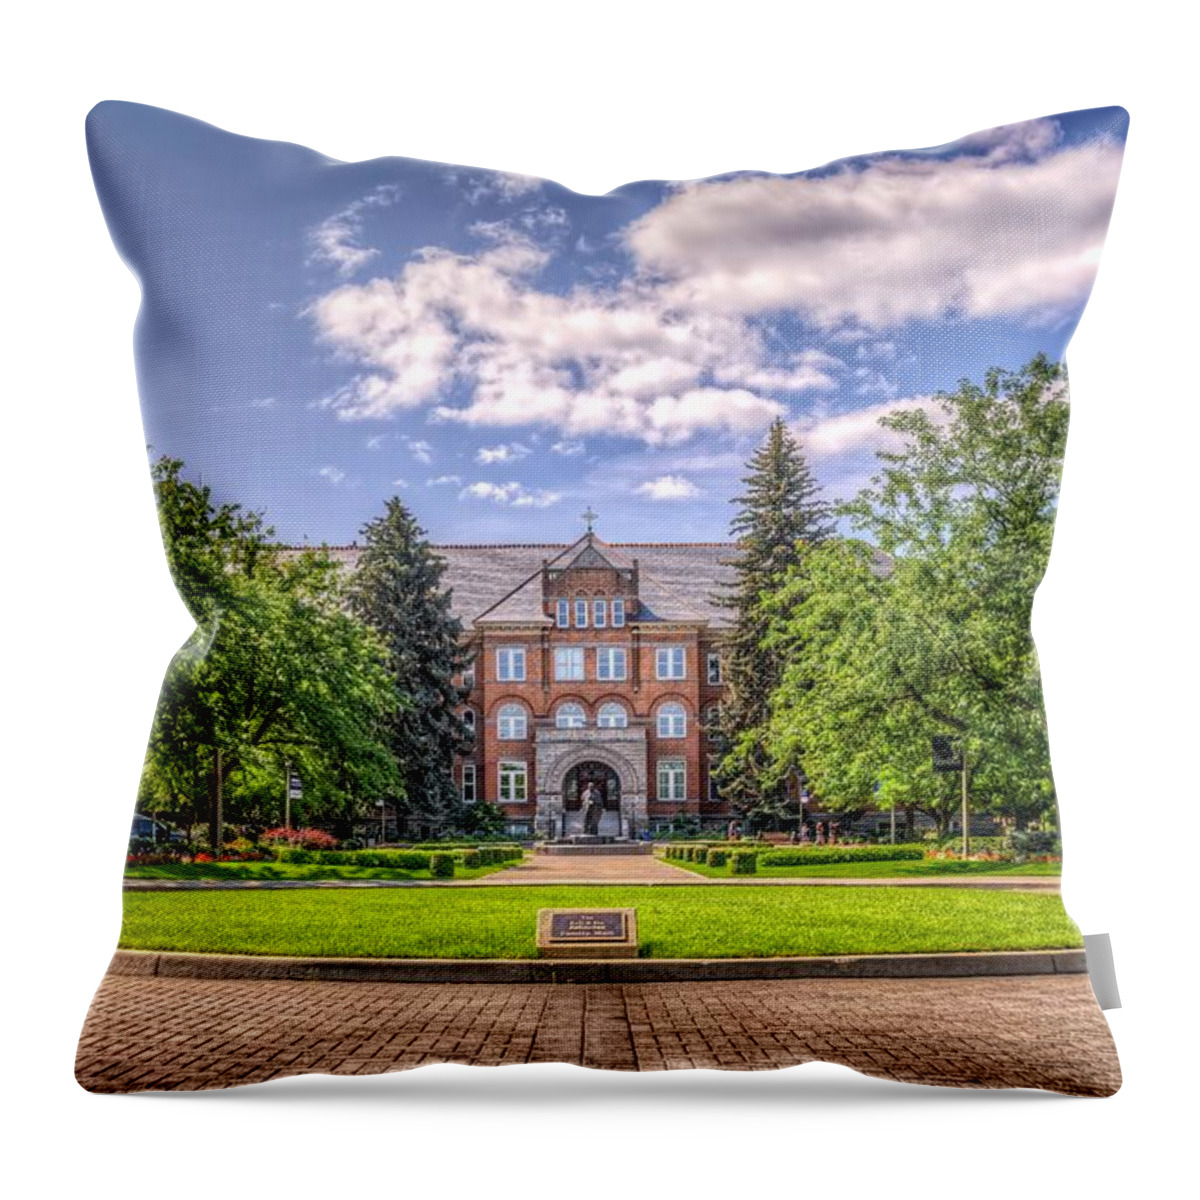 Spokane Throw Pillow featuring the photograph Gonzaga University by Spencer McDonald